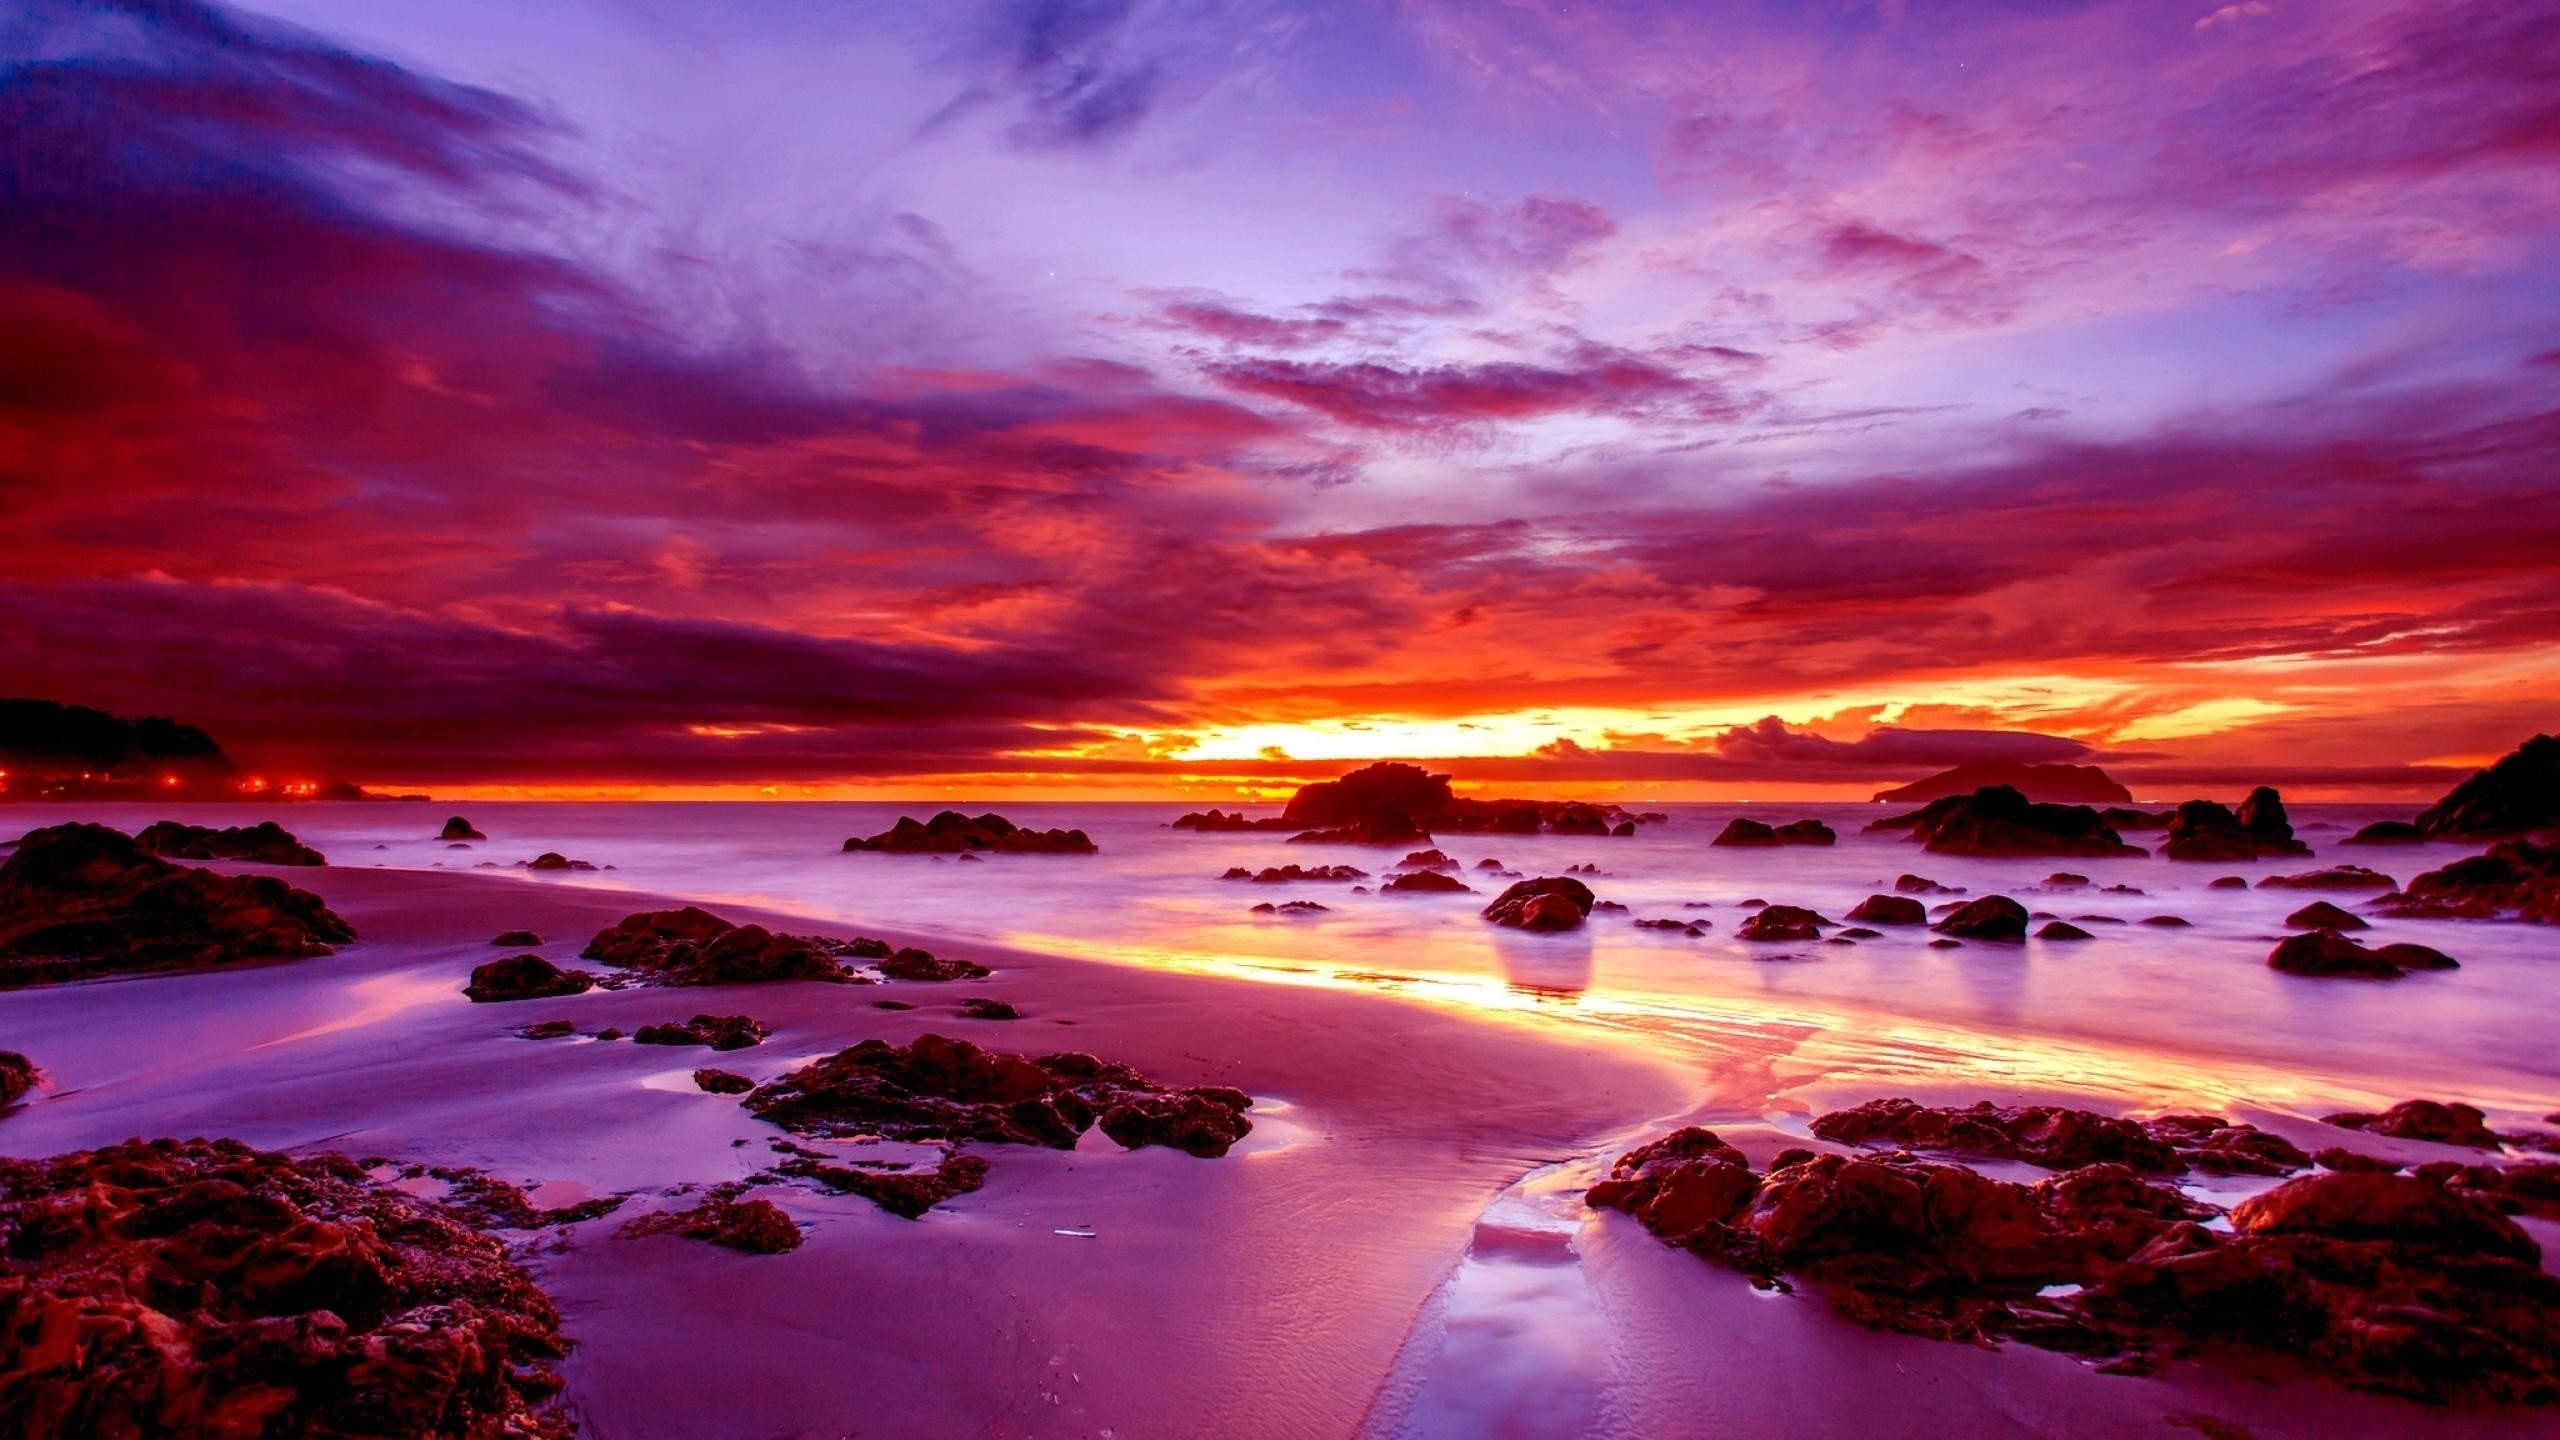 Wallpaper Sky Sunset Water Purple Ocean Nature PicsFabcom